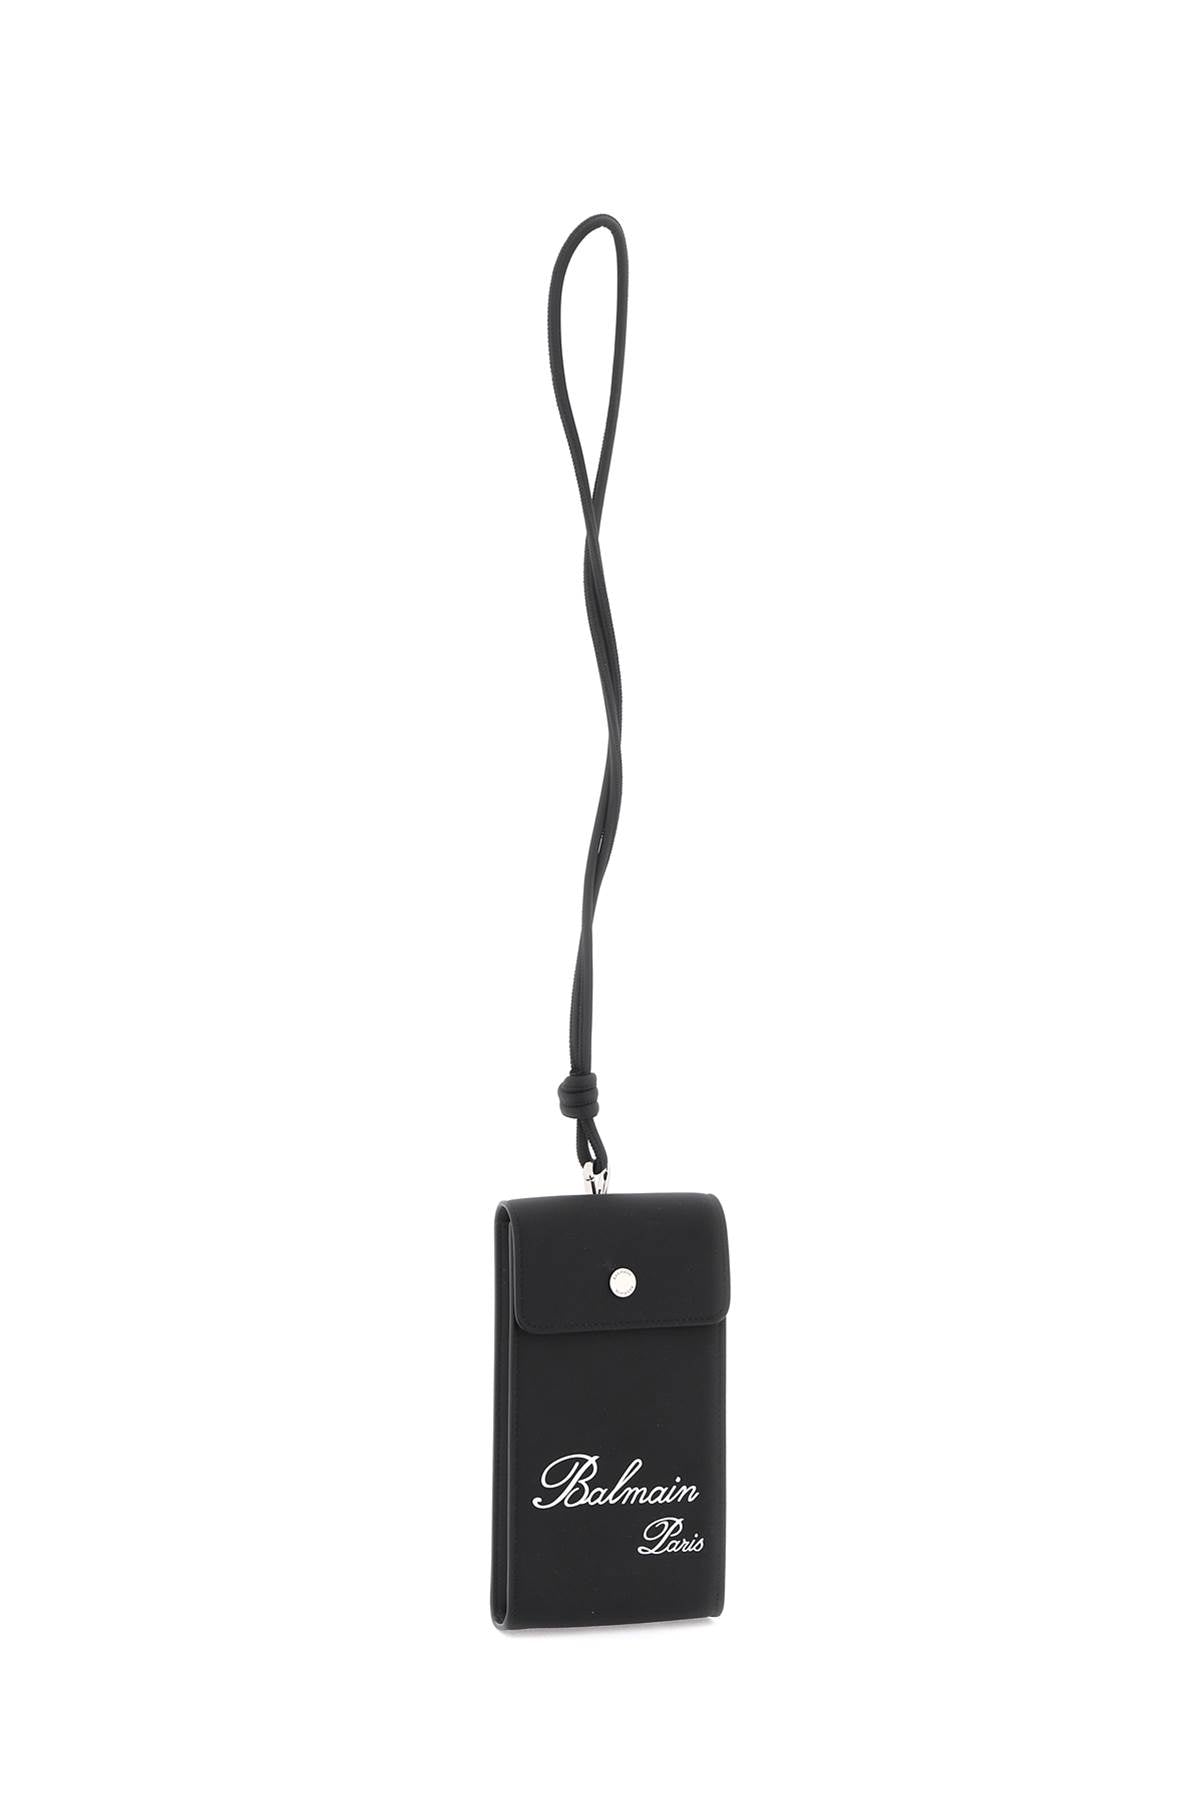 Balmain Balmain phone holder with logo